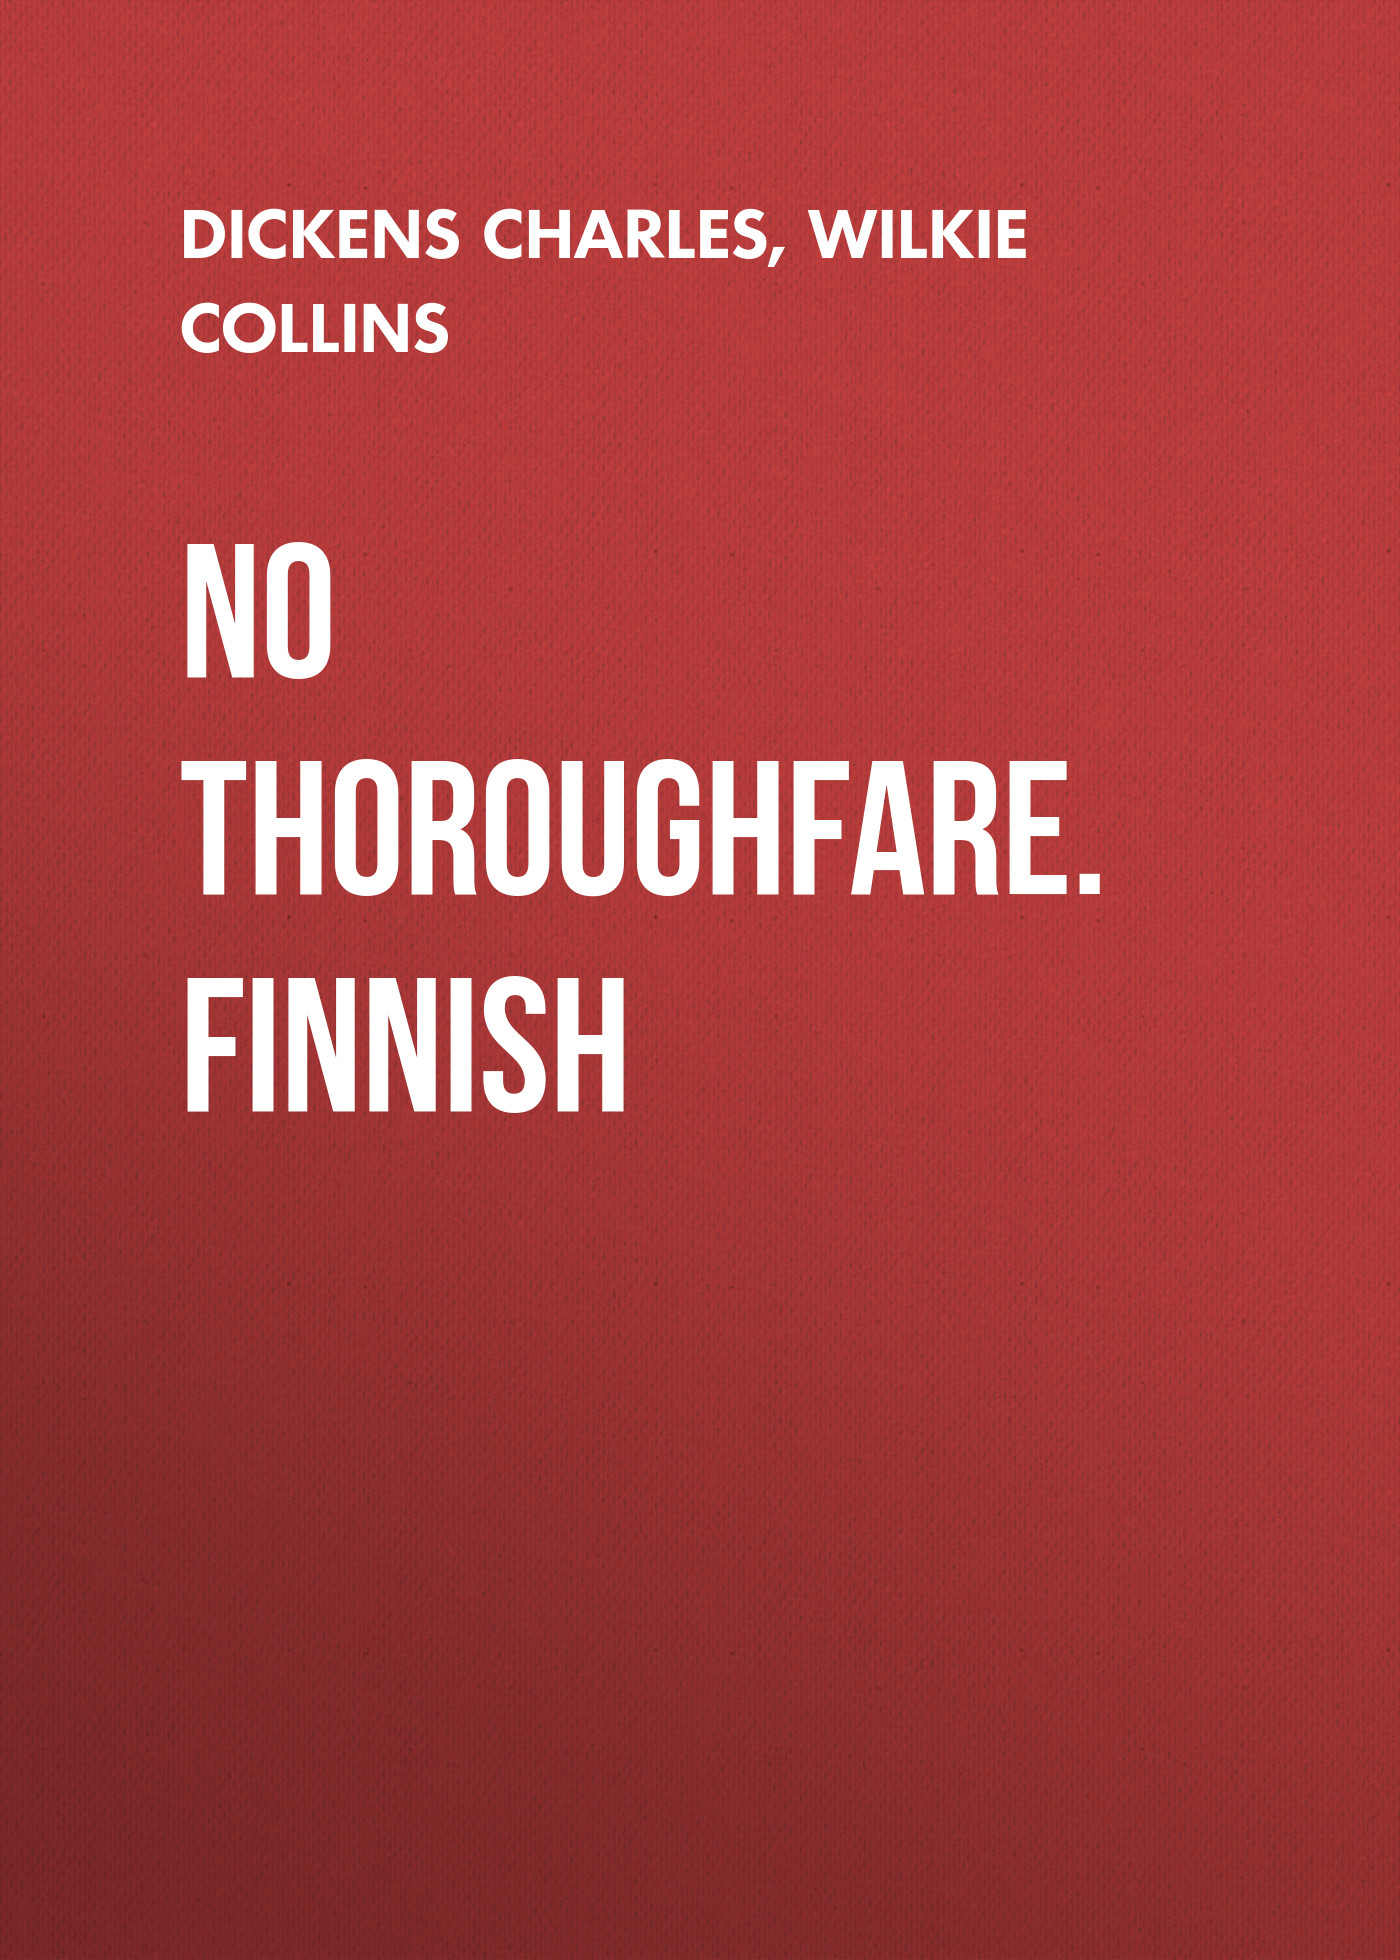 No thoroughfare. Finnish